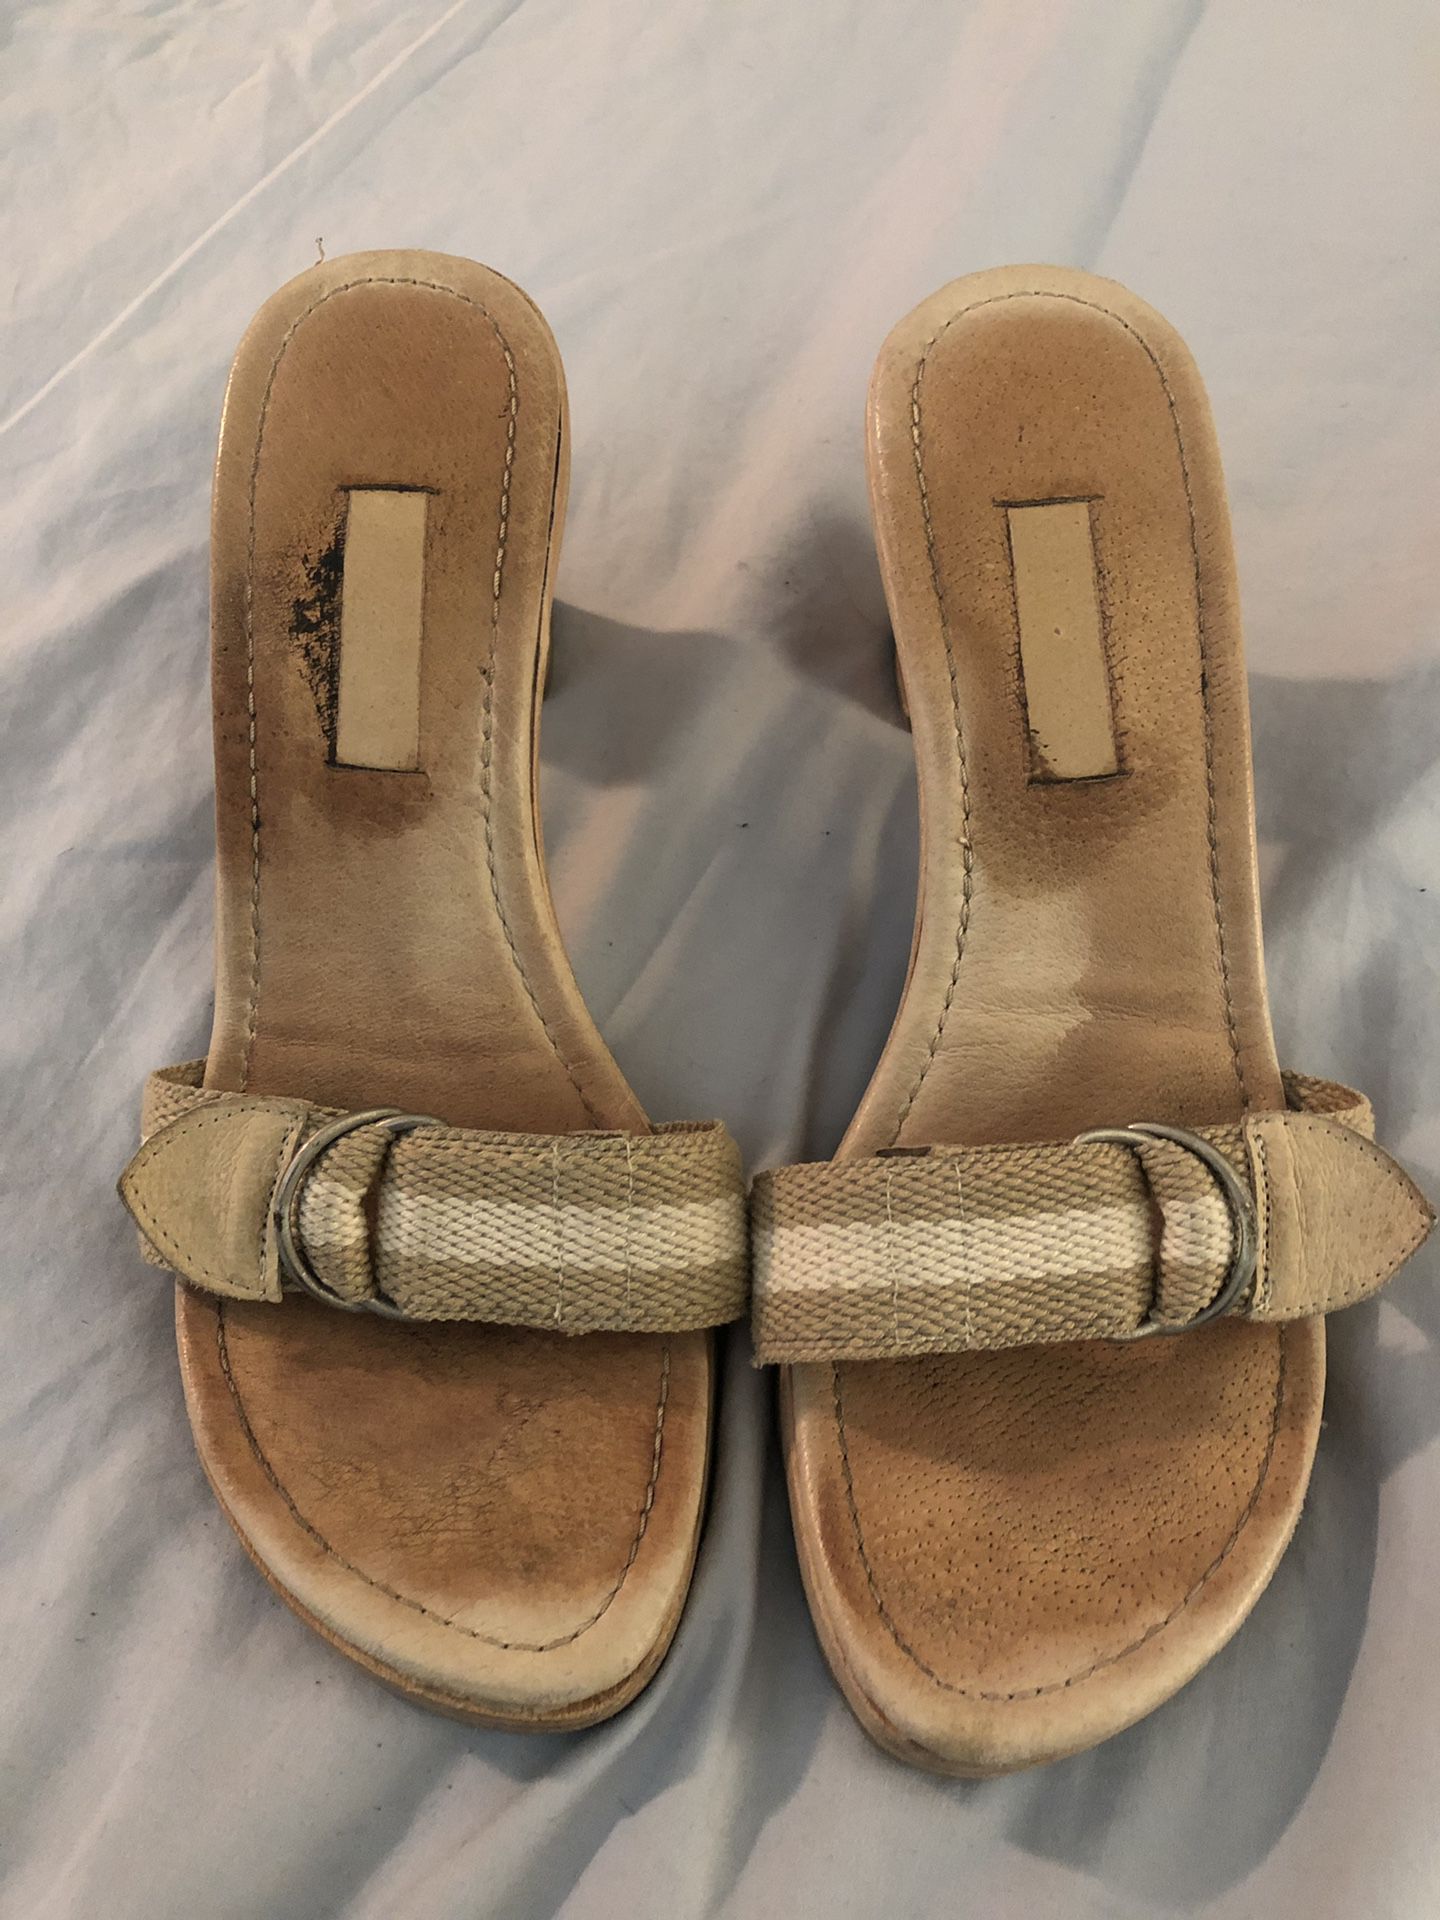 Canvas strap heel, JCrew(?), 8.5